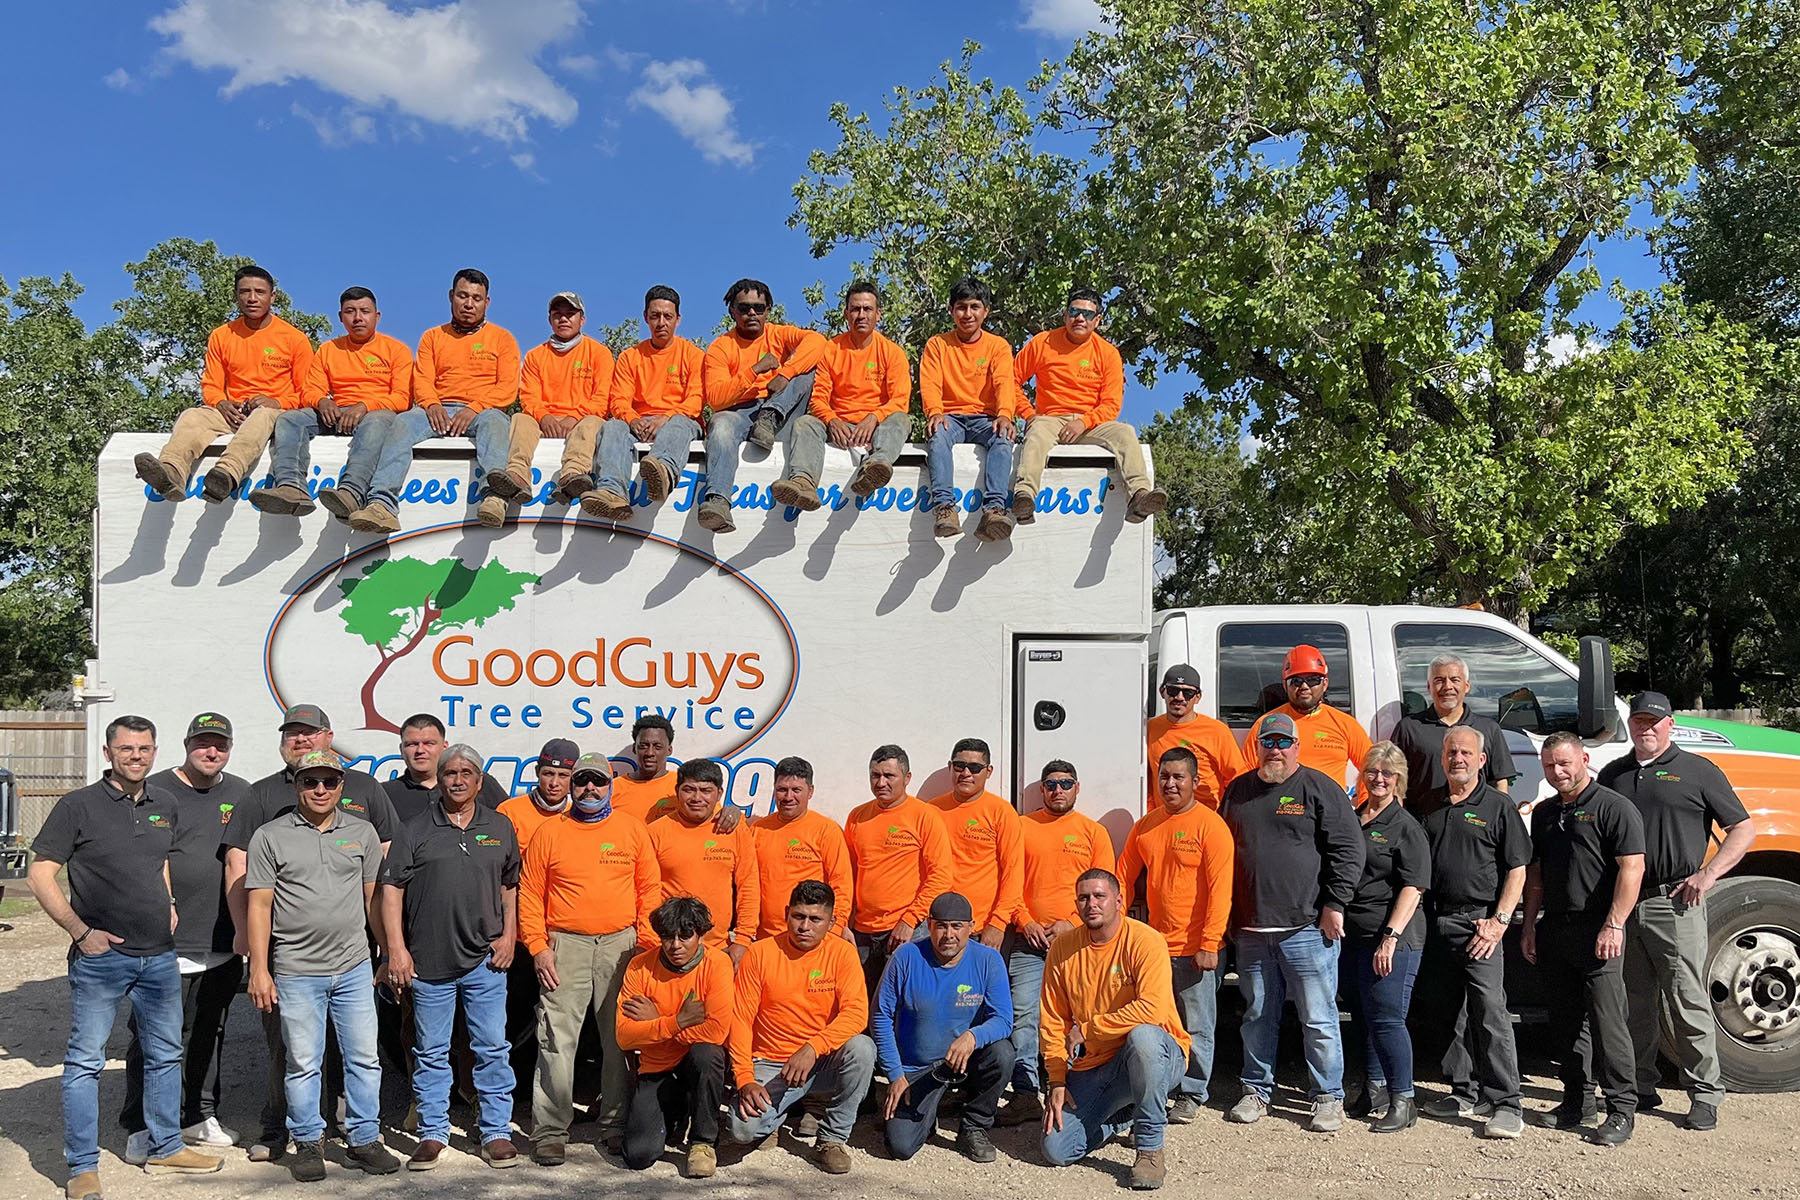 Good Guy Tree Service - Lake Travis Tree Trimming & Service